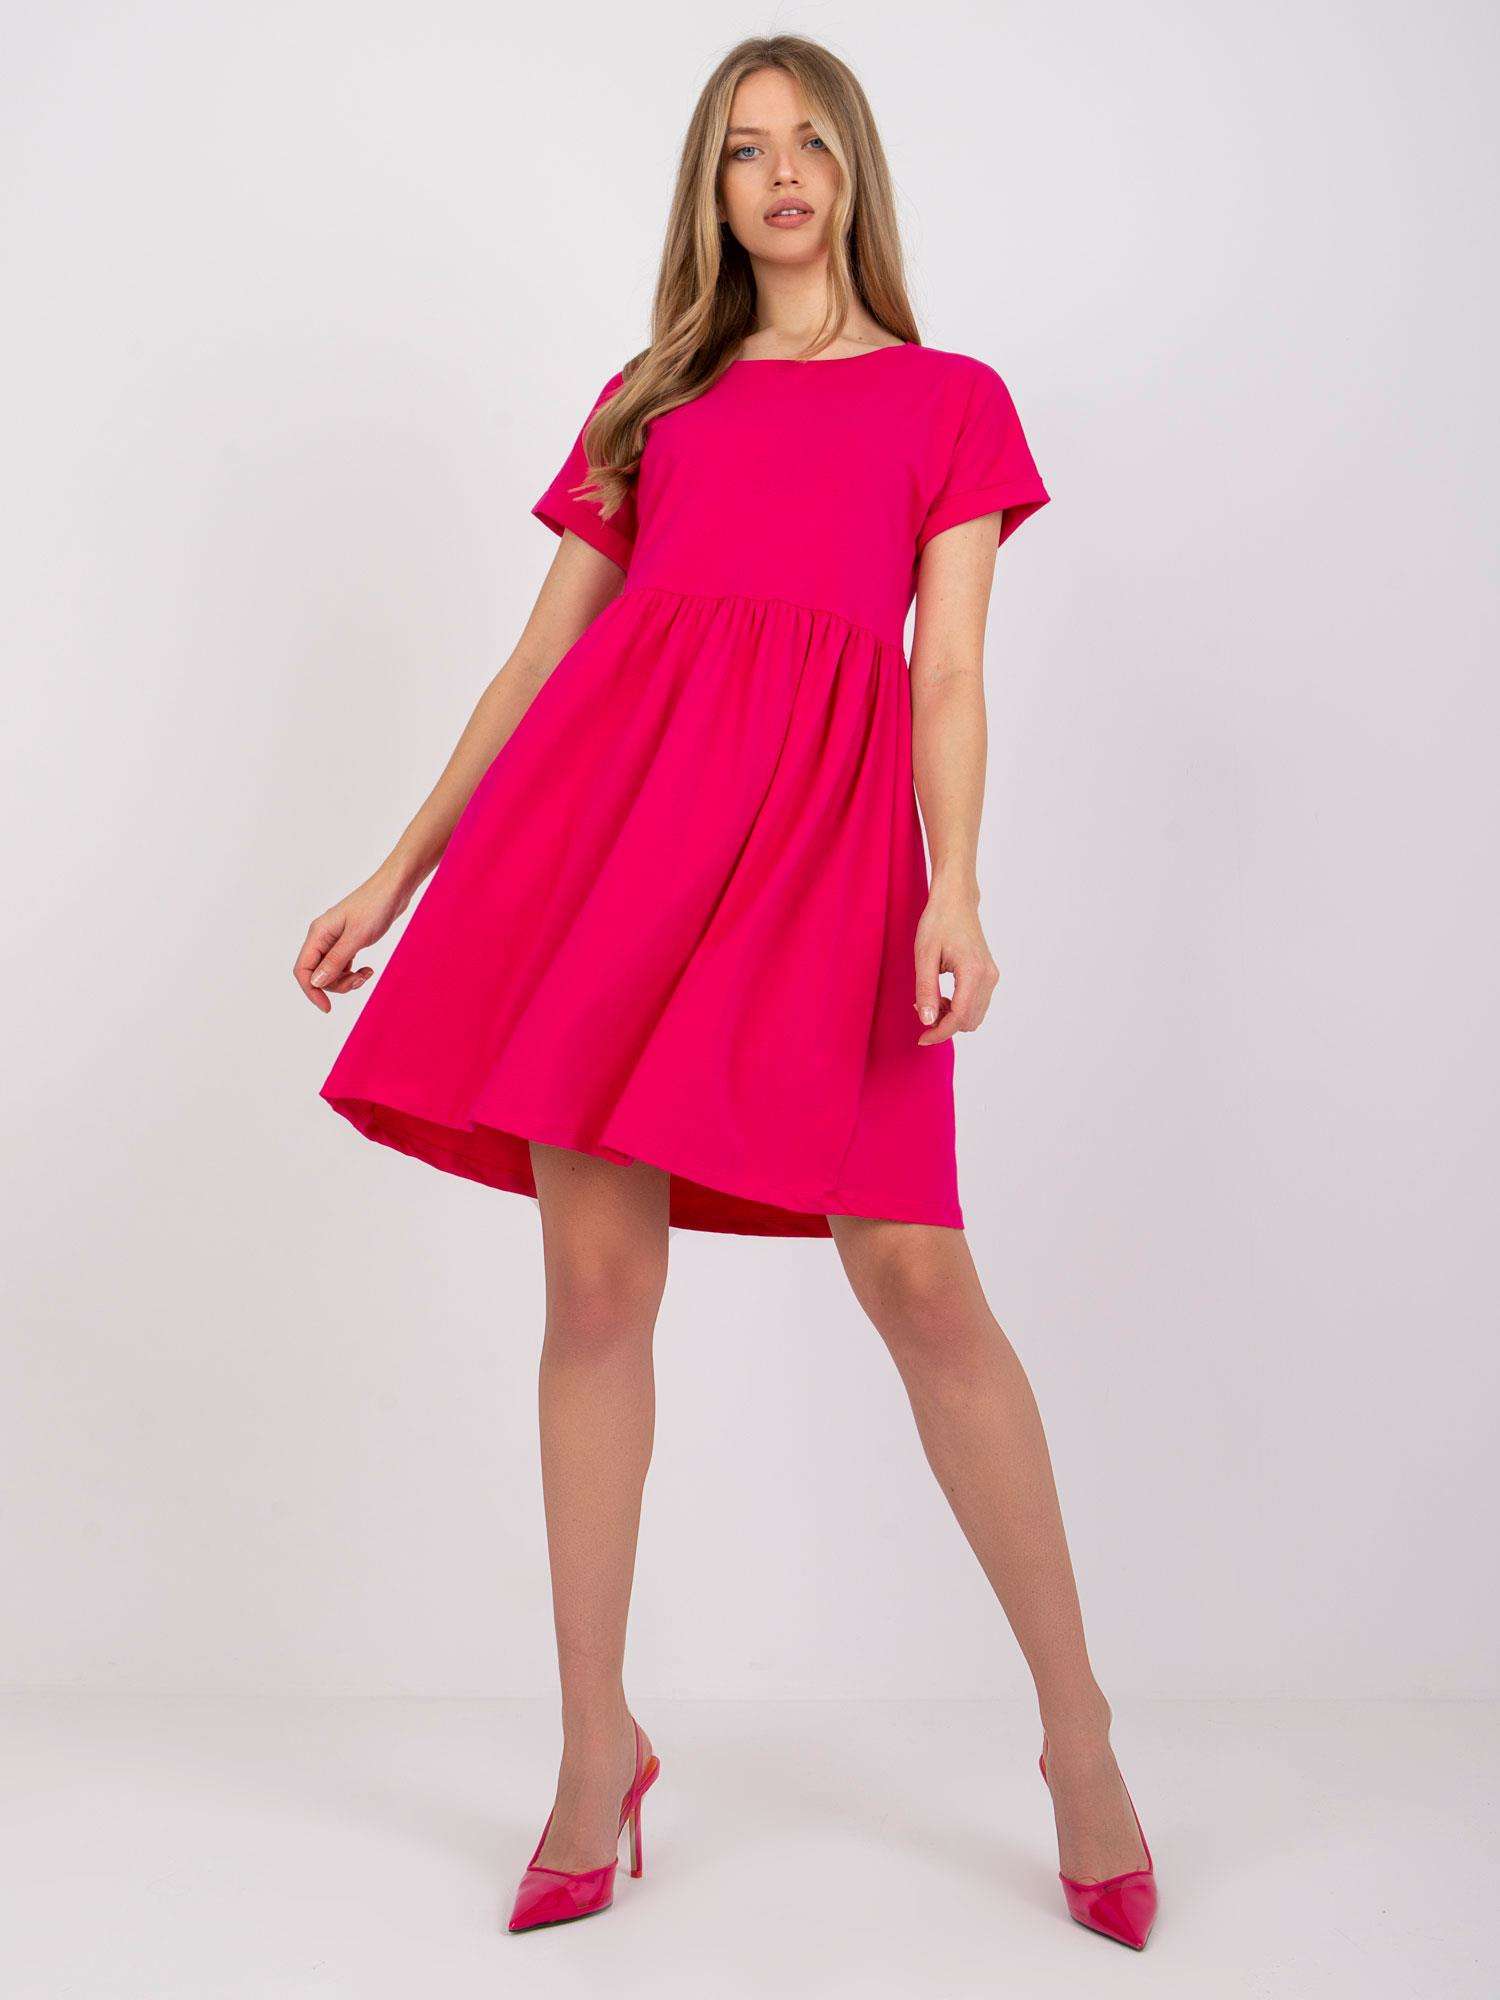 Fuchsiové šaty Dita s krátkým rukávem RV-SK-5672.03P-fuchsia pink Velikost: S